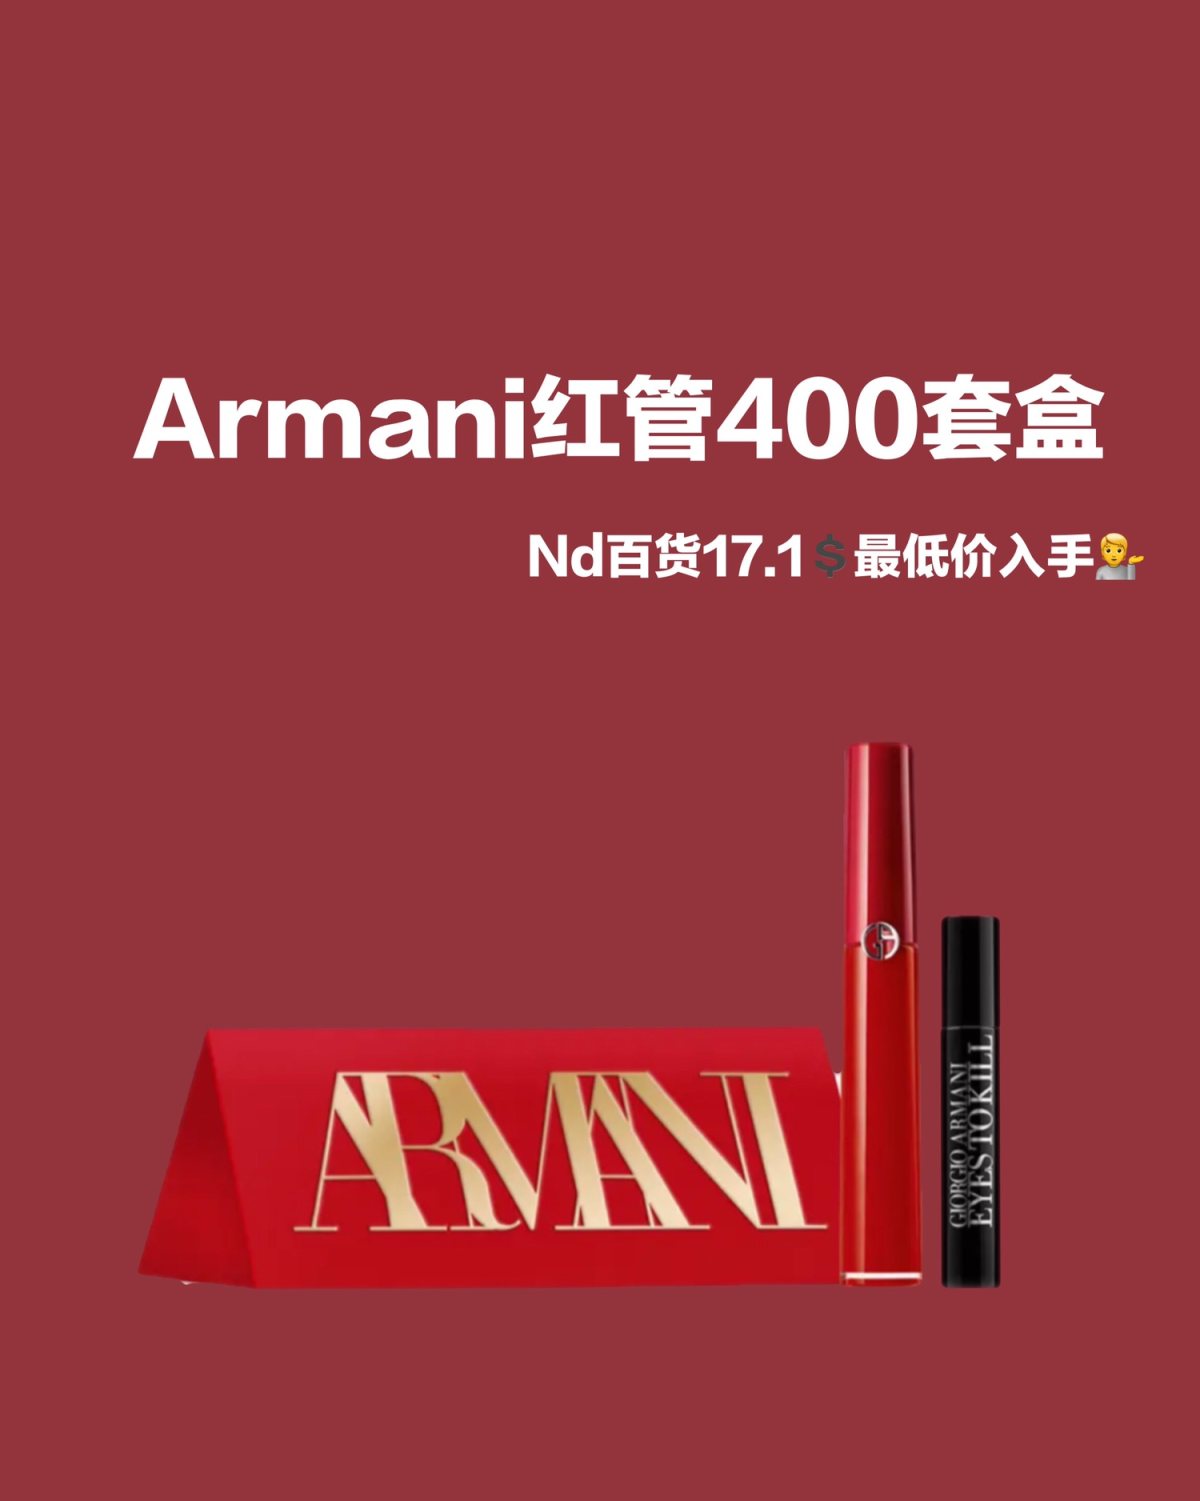 Armani红管400套盒大家买了吗 以为丝芙兰5折已经最便